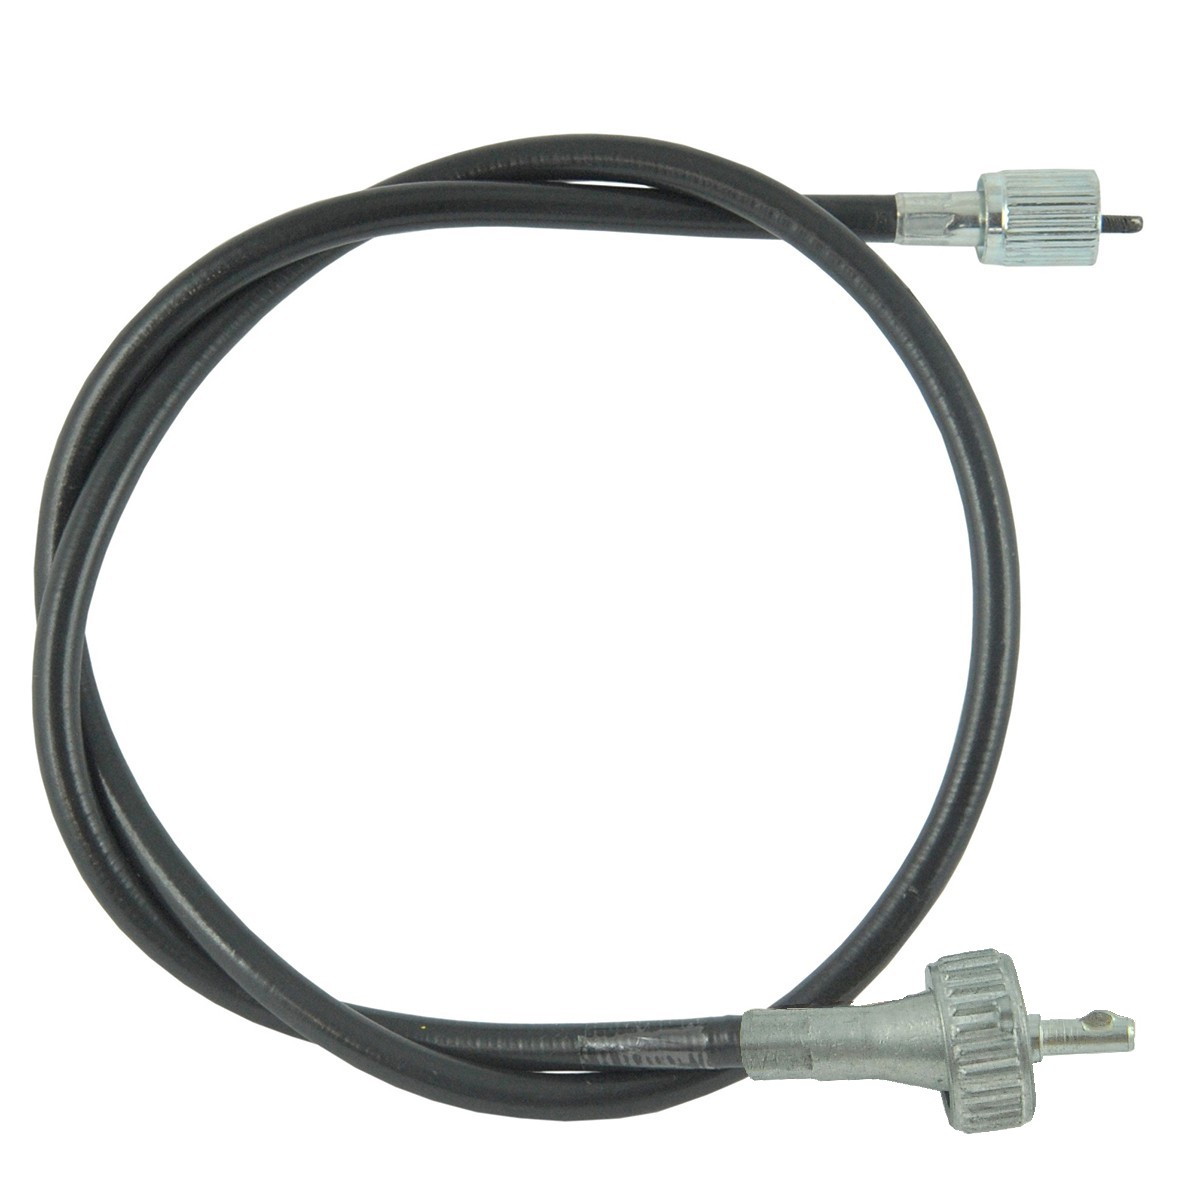 Counter cable / 880 mm / Iseki TE/TL/TS/TU/TX / 1480-621-001-00 / OBMT07B